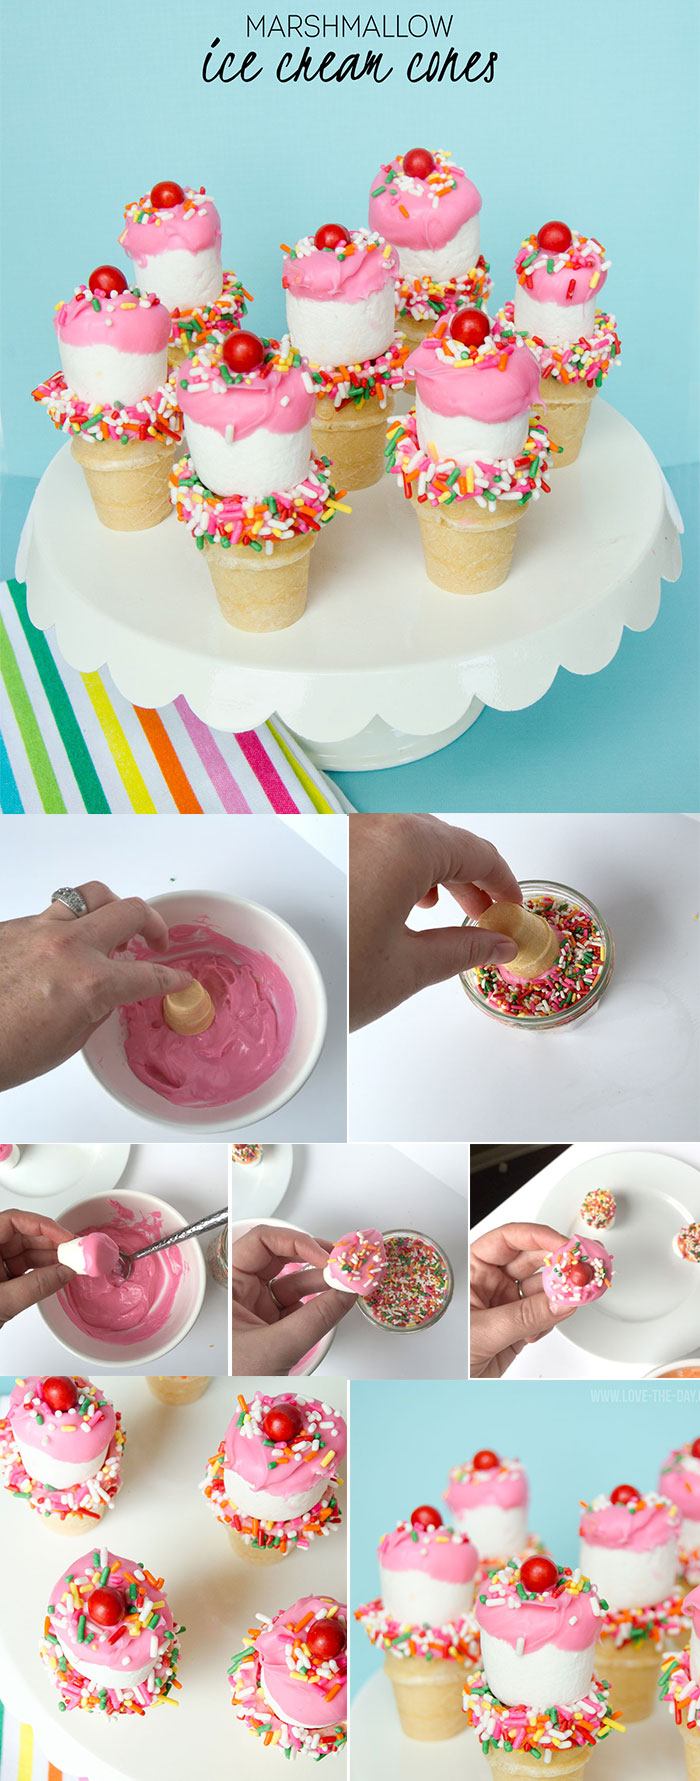 Mini Marshmallow Ice Cream Cones by Love The Day